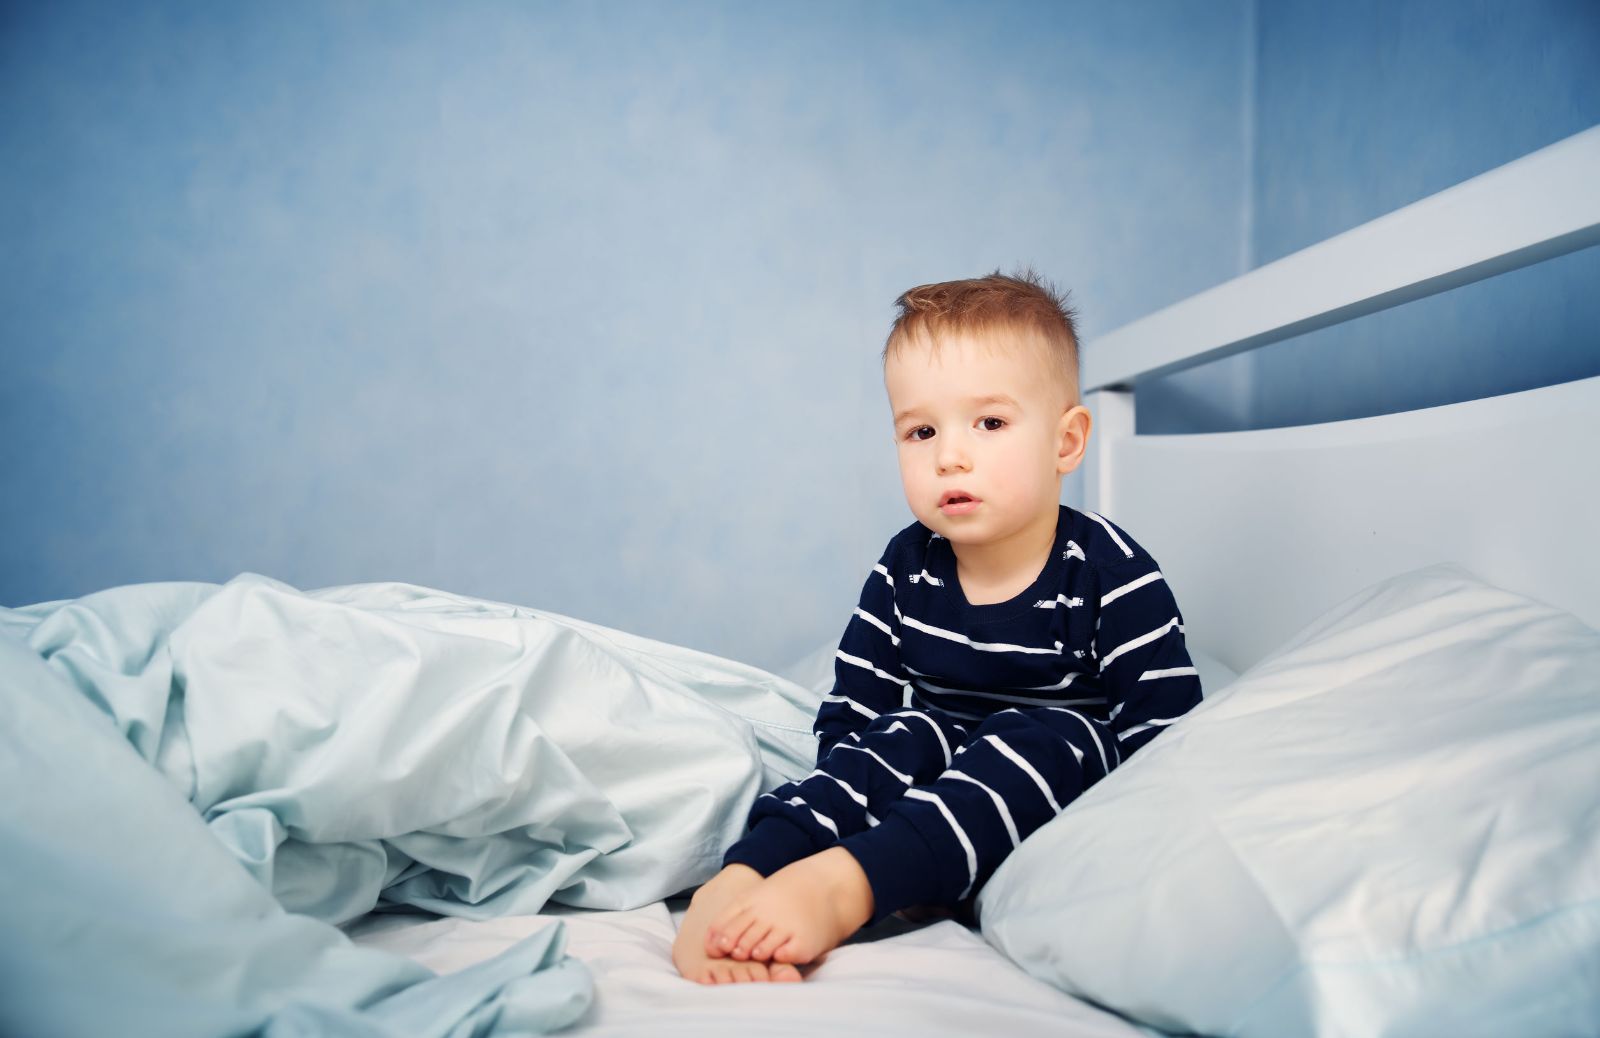 Verme solitario nei bambini: i sintomi da non sottovalutare